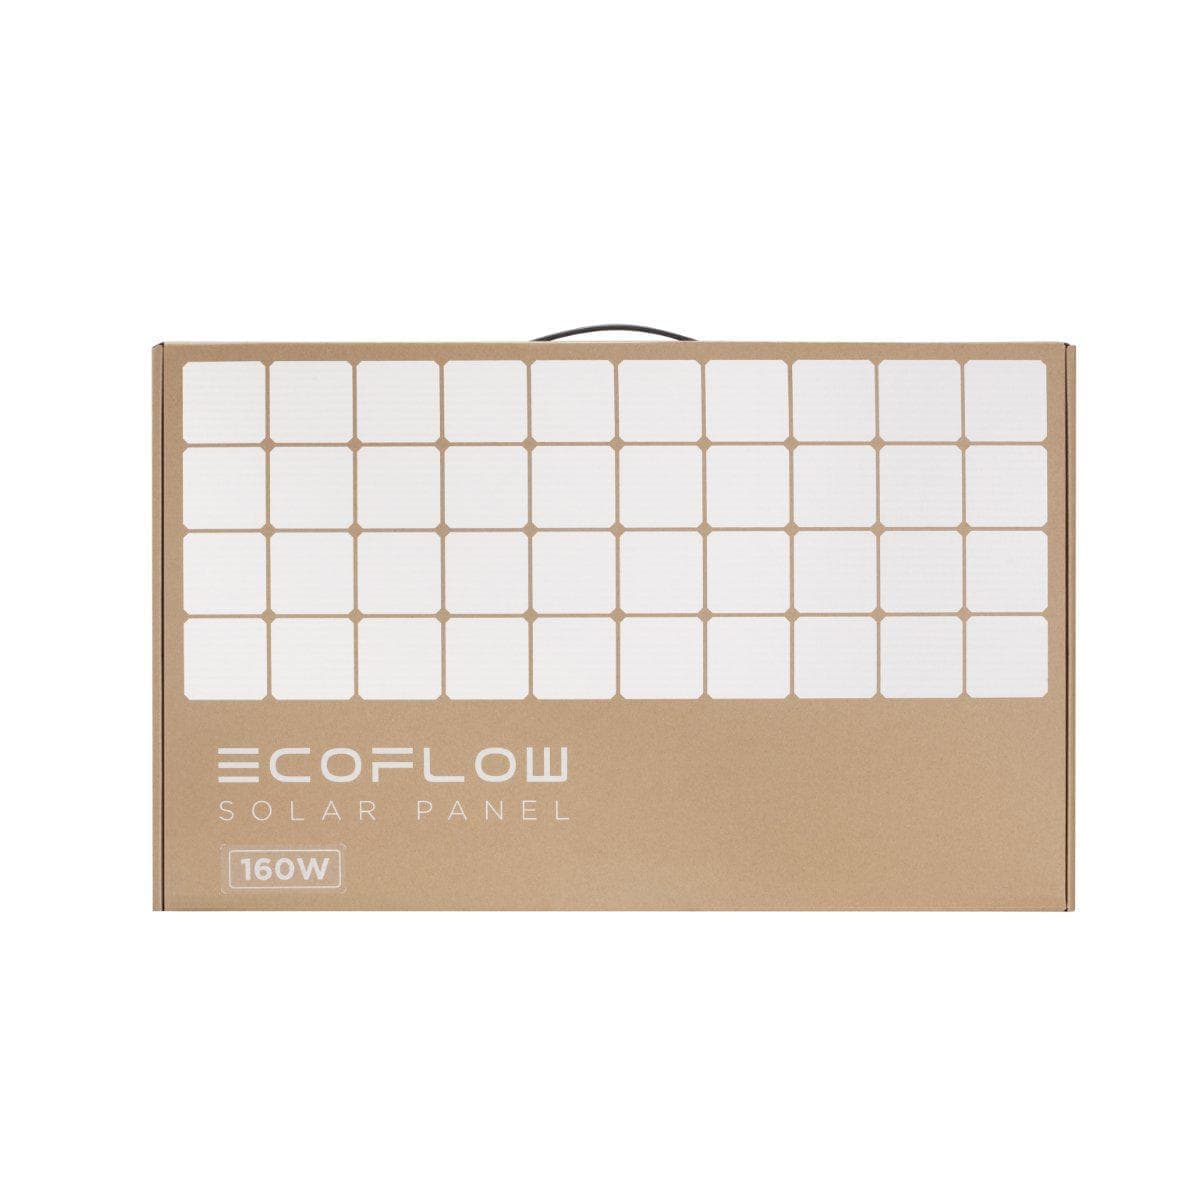 EcoFlow EcoFlow 160W Portable Solar Panel*2 160W Portable Solar Panel x 2